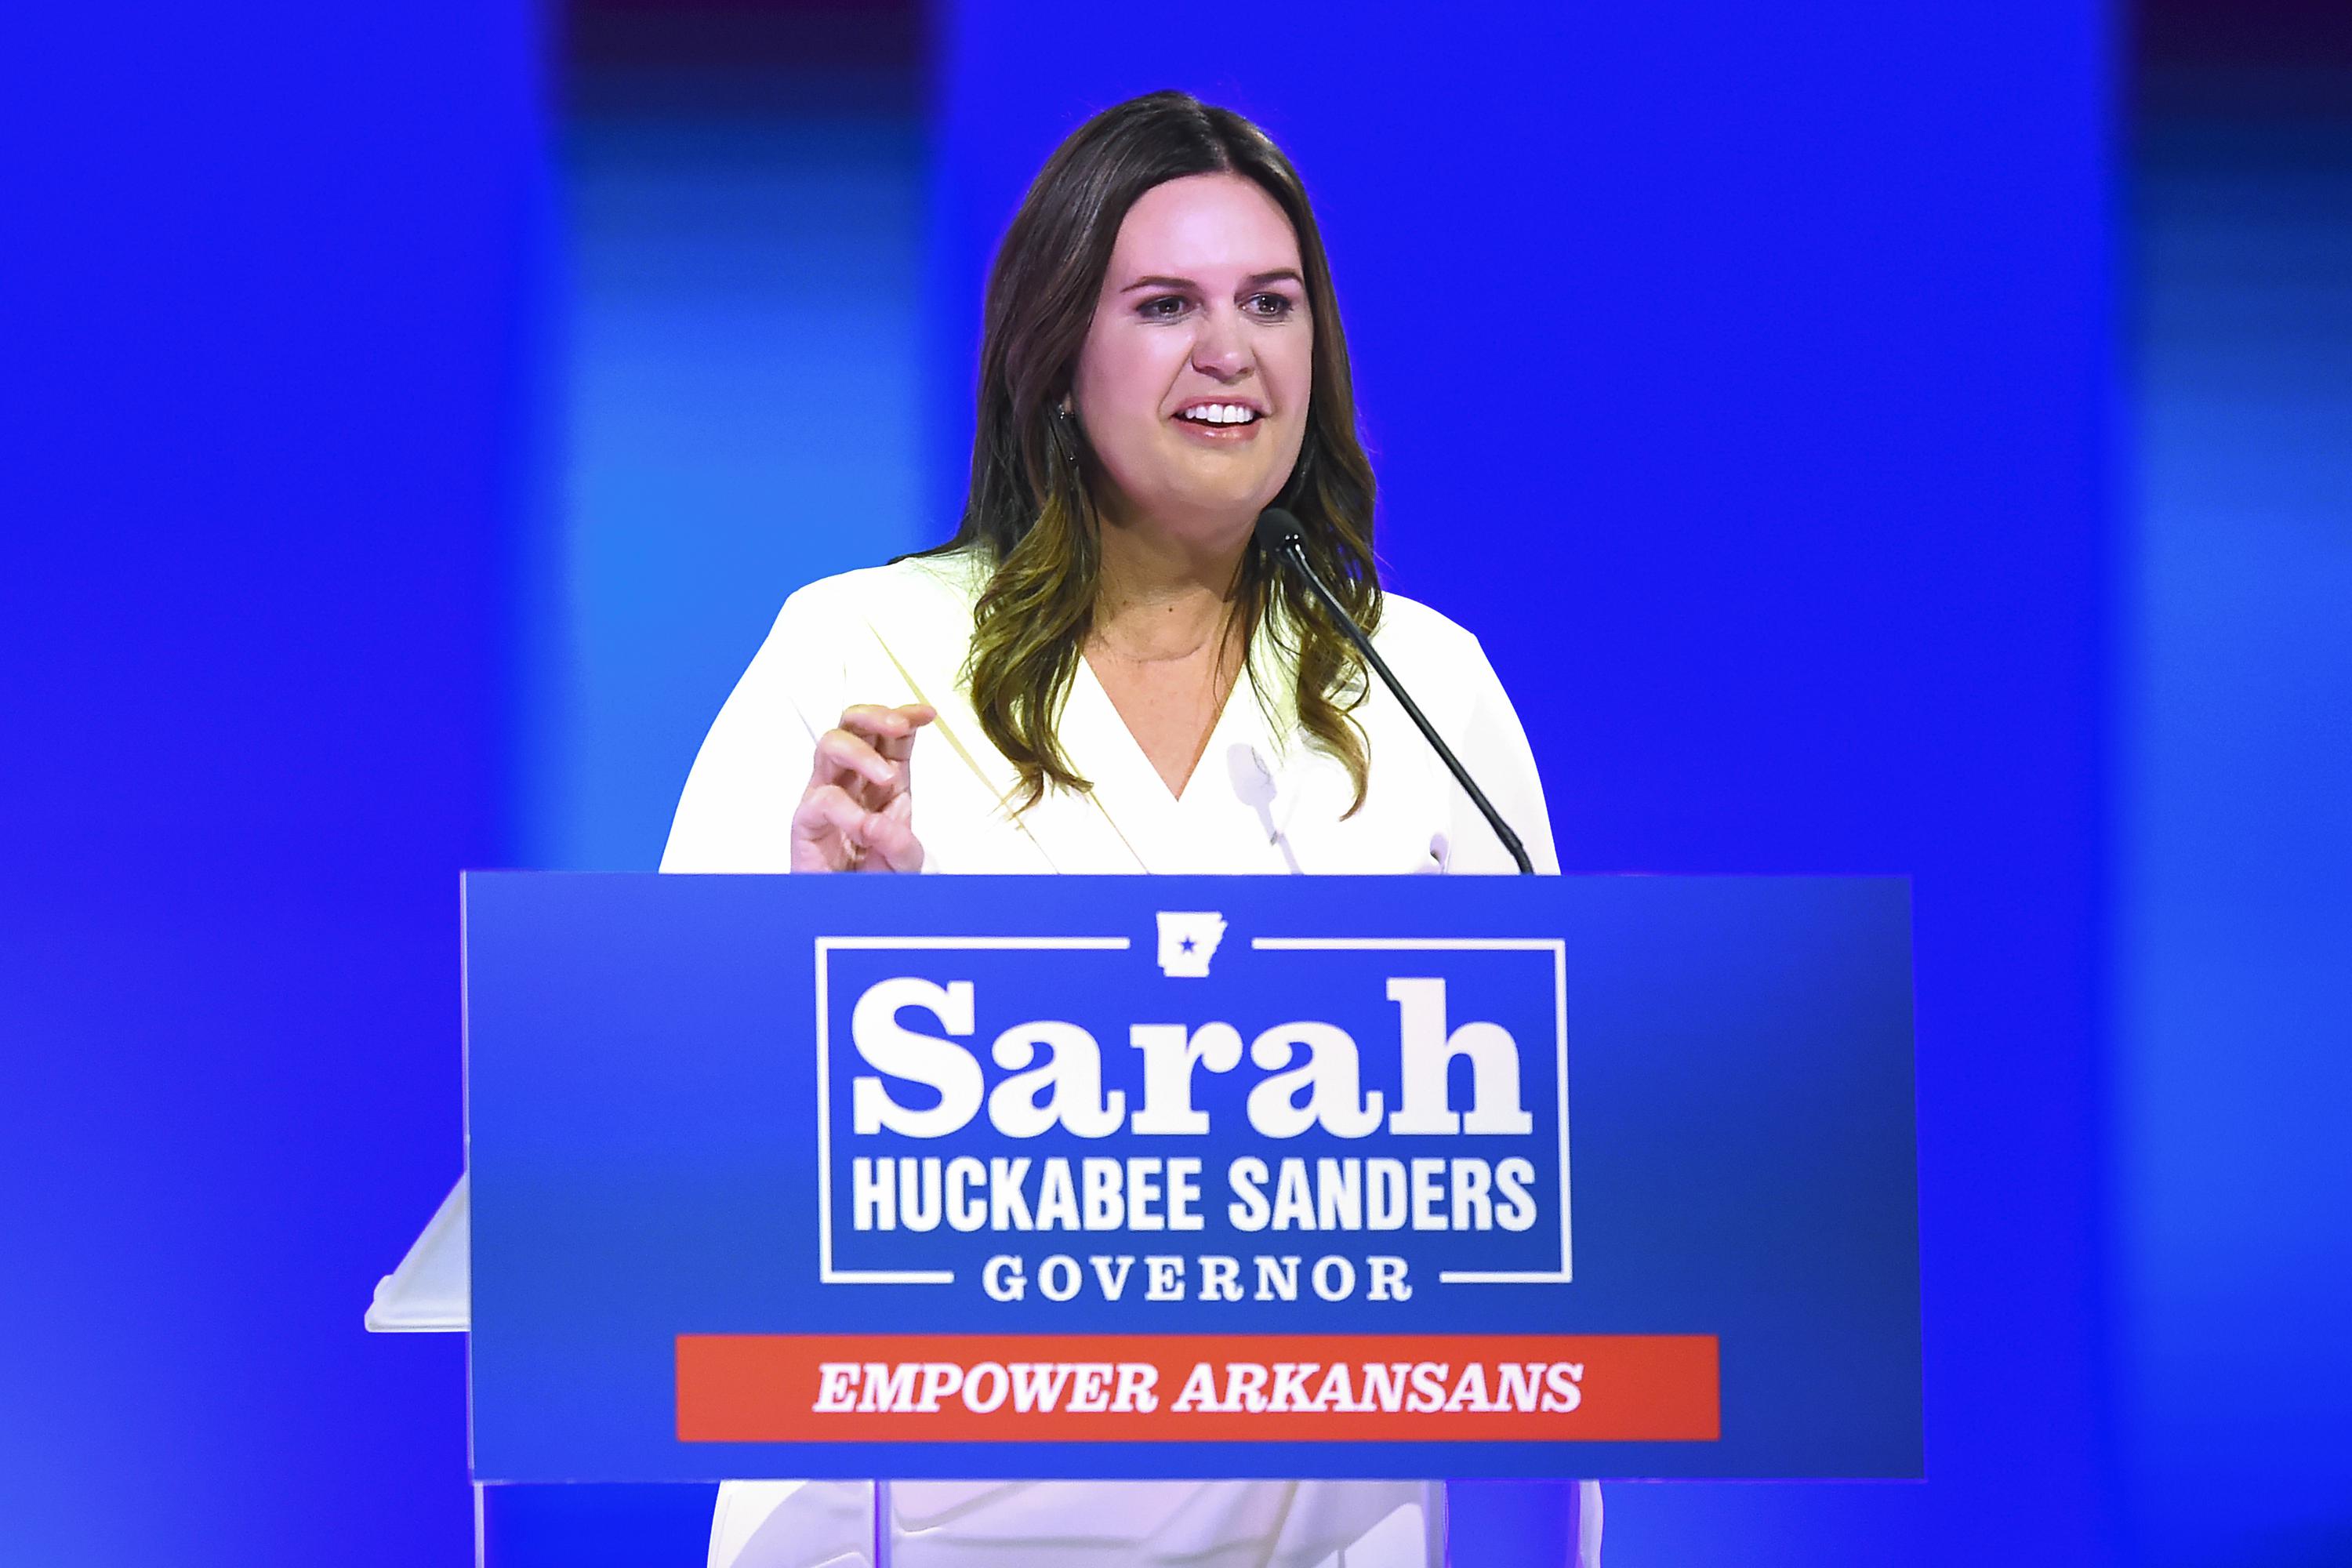 Sarah Huckabee Sanders 1st woman elected Arkansas governor